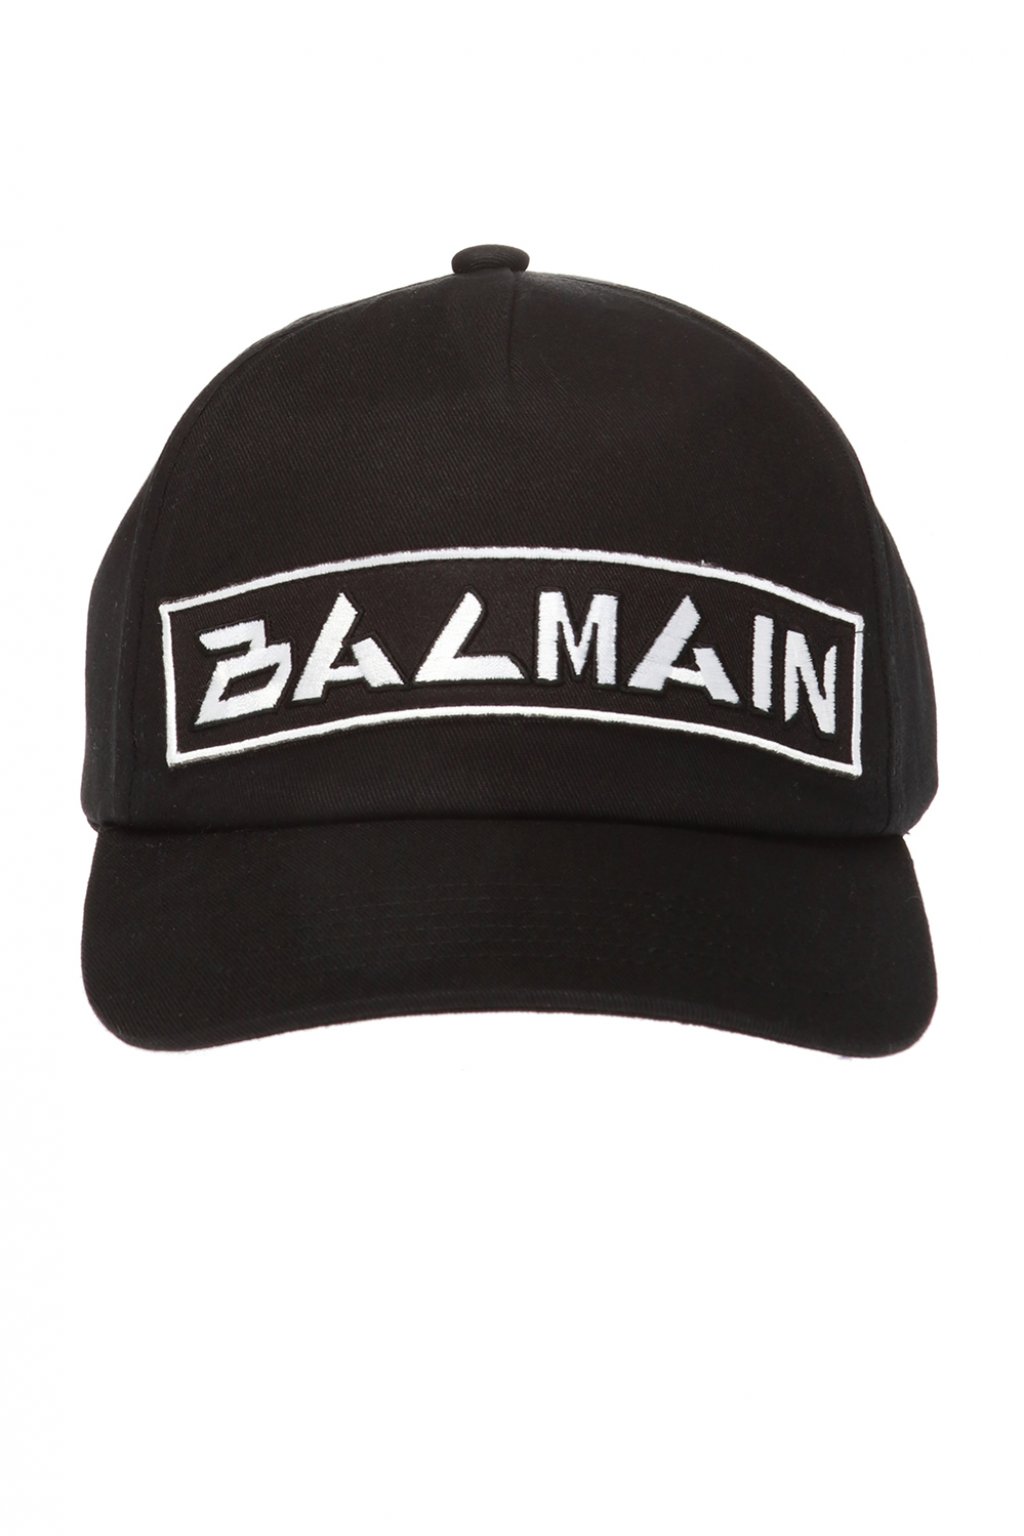 Balmain ‘Beatle’ baseball cap | Men's Accessories | Vitkac